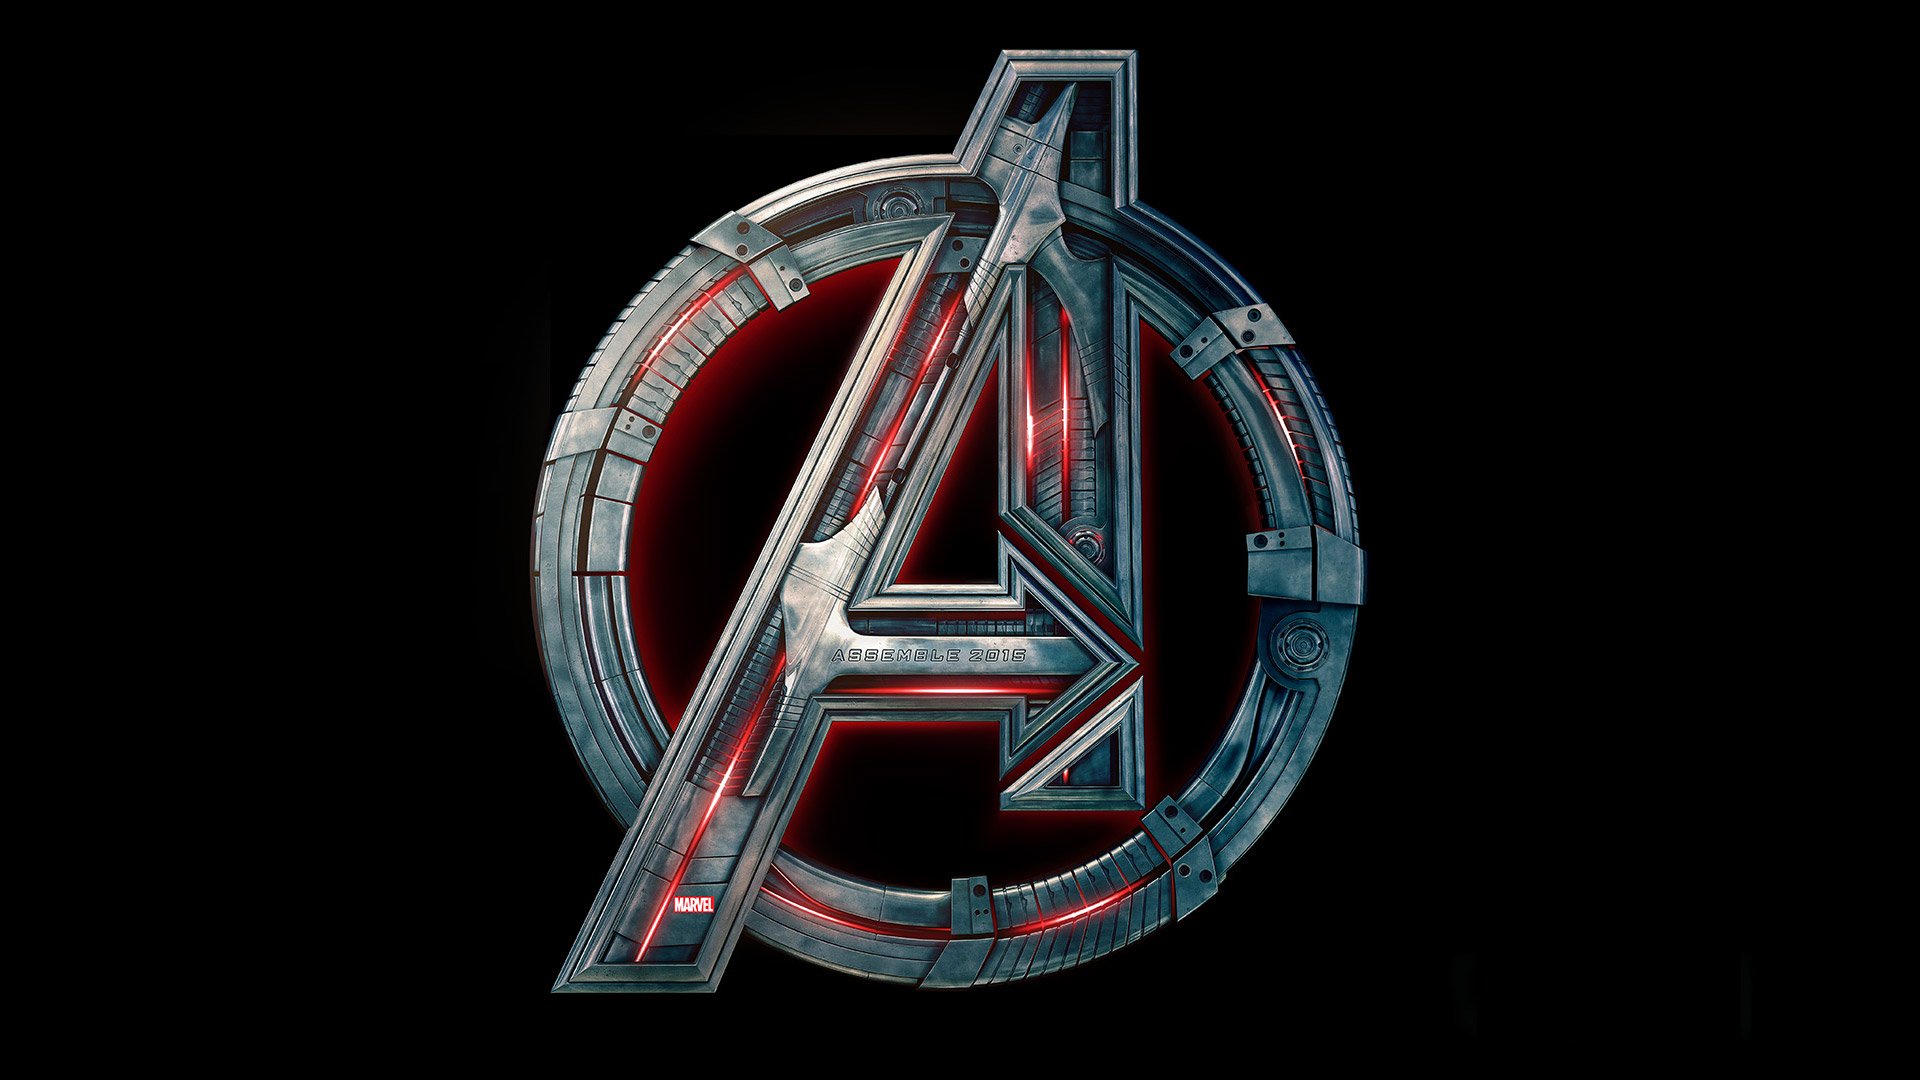 Avengers 2 Age Of Ultron 2015 Desktop IPhone Wallpapers HD